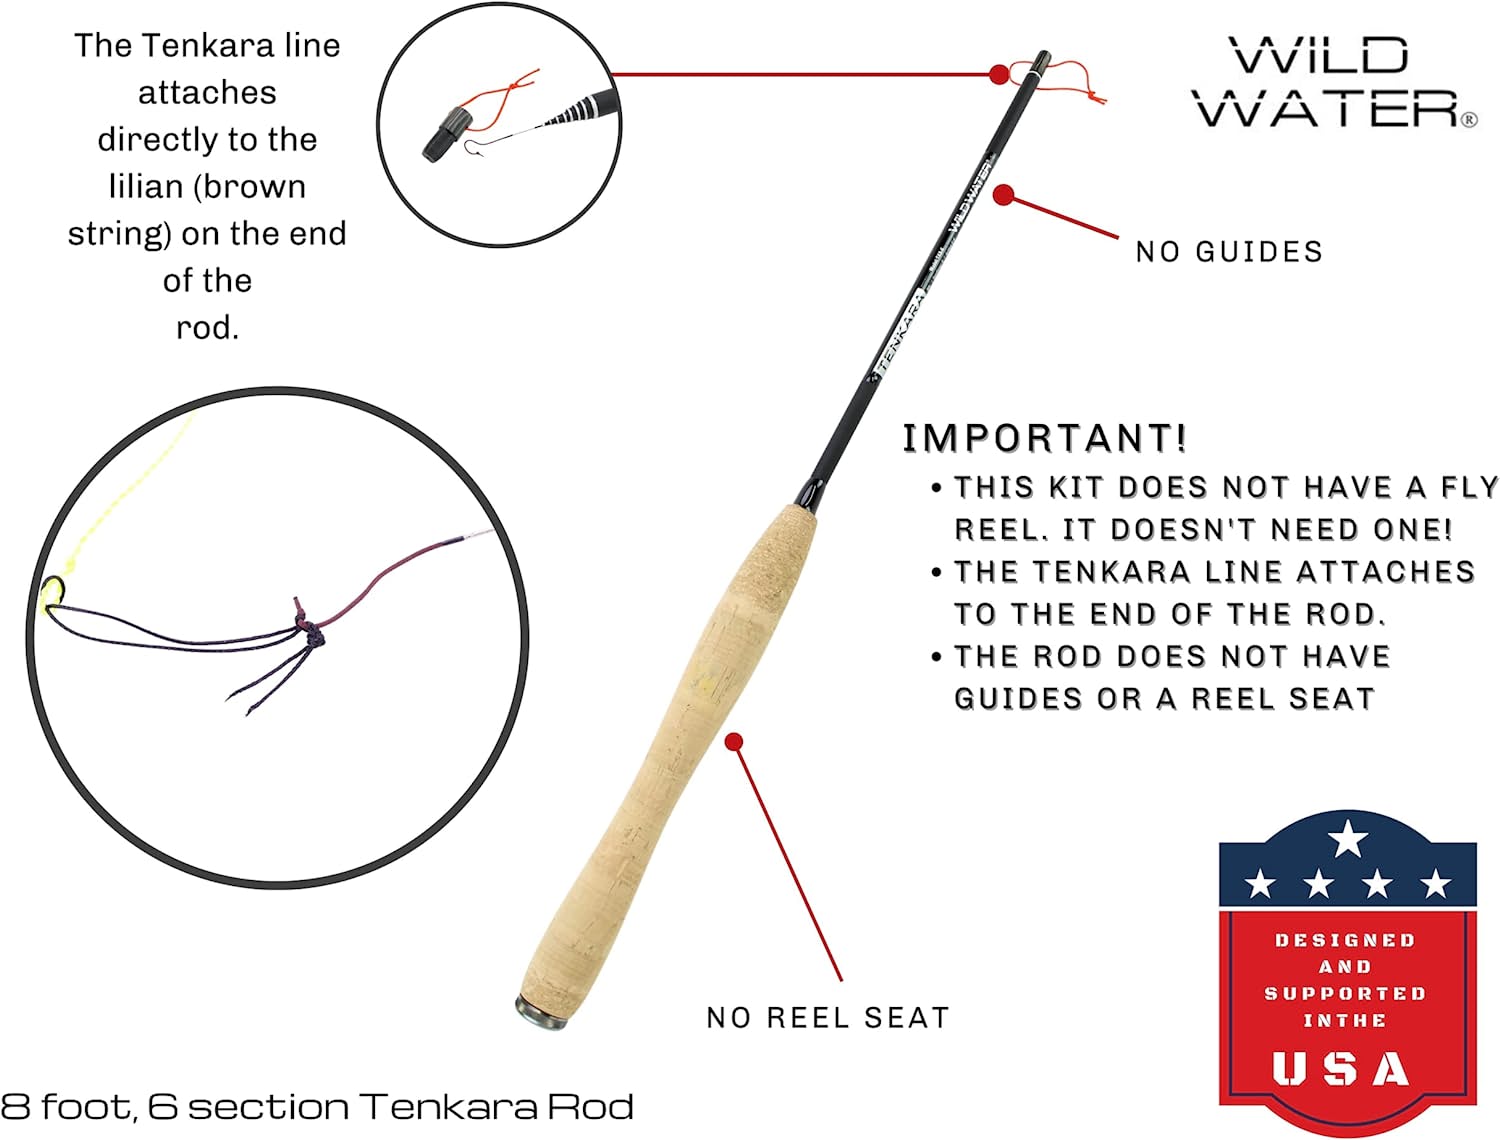 Wild Water Tenkara Fly Fishing Kit 8 ft Rod